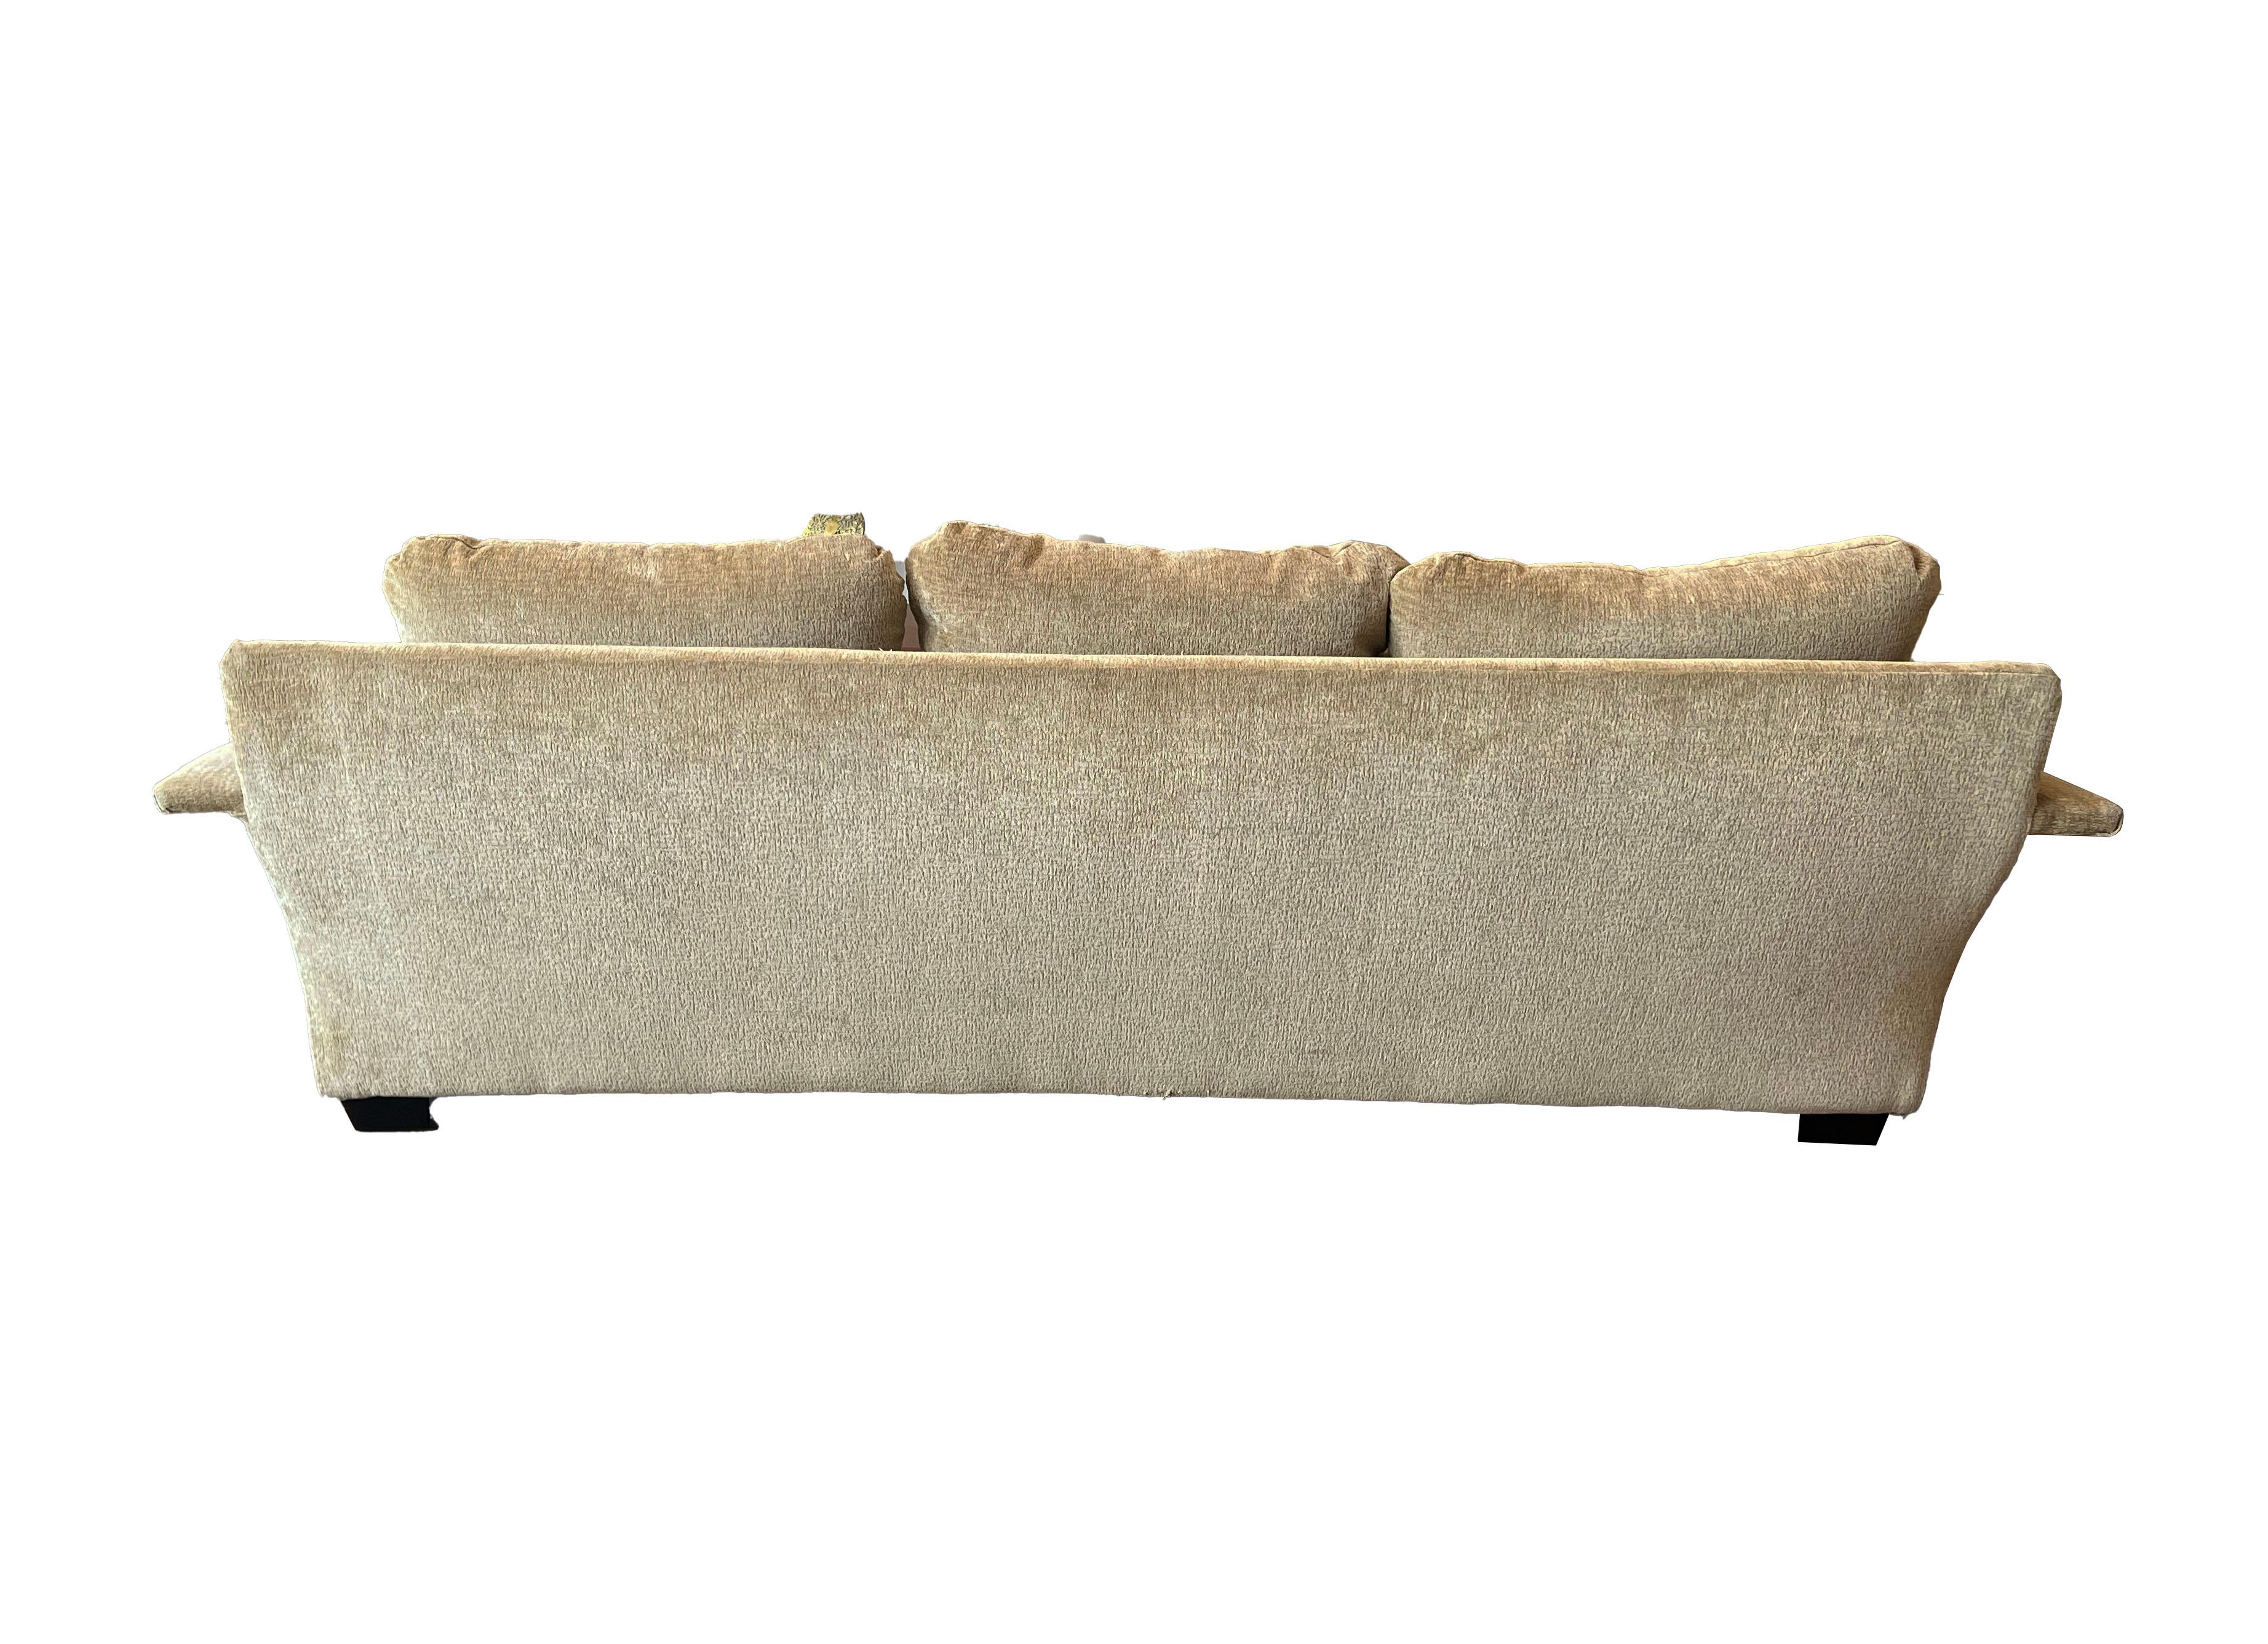 Luxurious Tan Velvet Sofa In Good Condition For Sale In Scottsdale, AZ